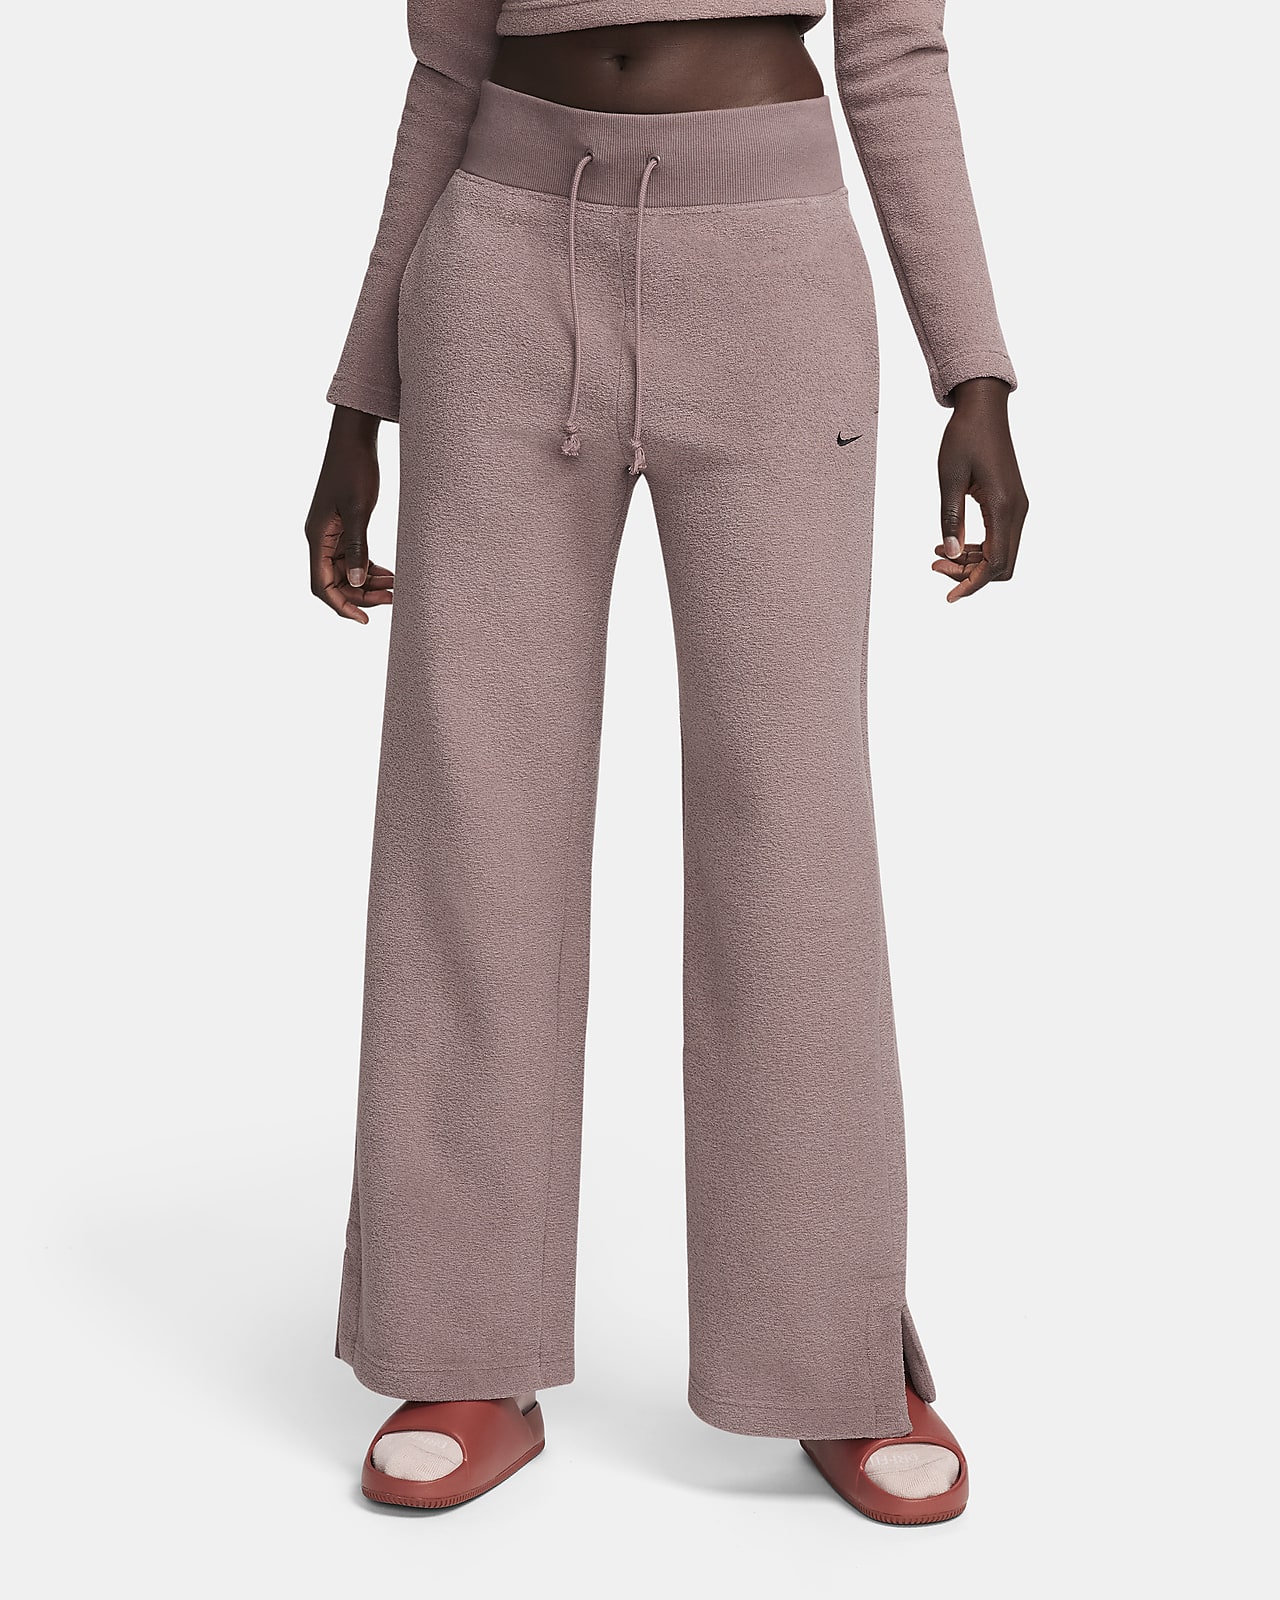 Nike Sportswear Phoenix Plush Pantalón de talle alto y tejido Fleece cálido con pierna ancha - Mujer